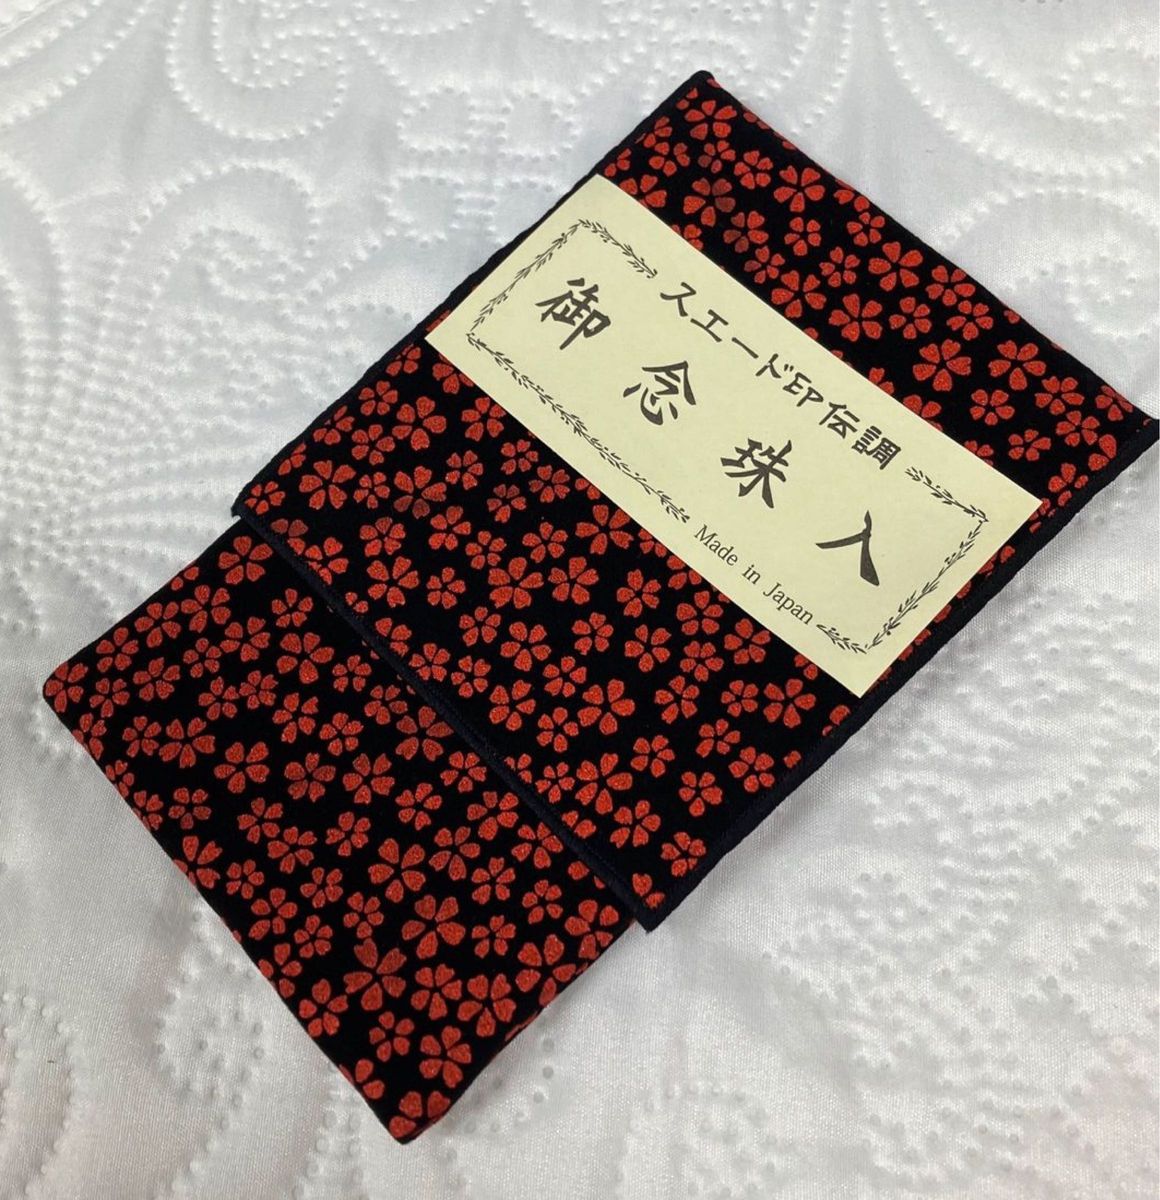 新品御念珠入れ日本製スェード印伝調縦型小桜柄赤模様NO2